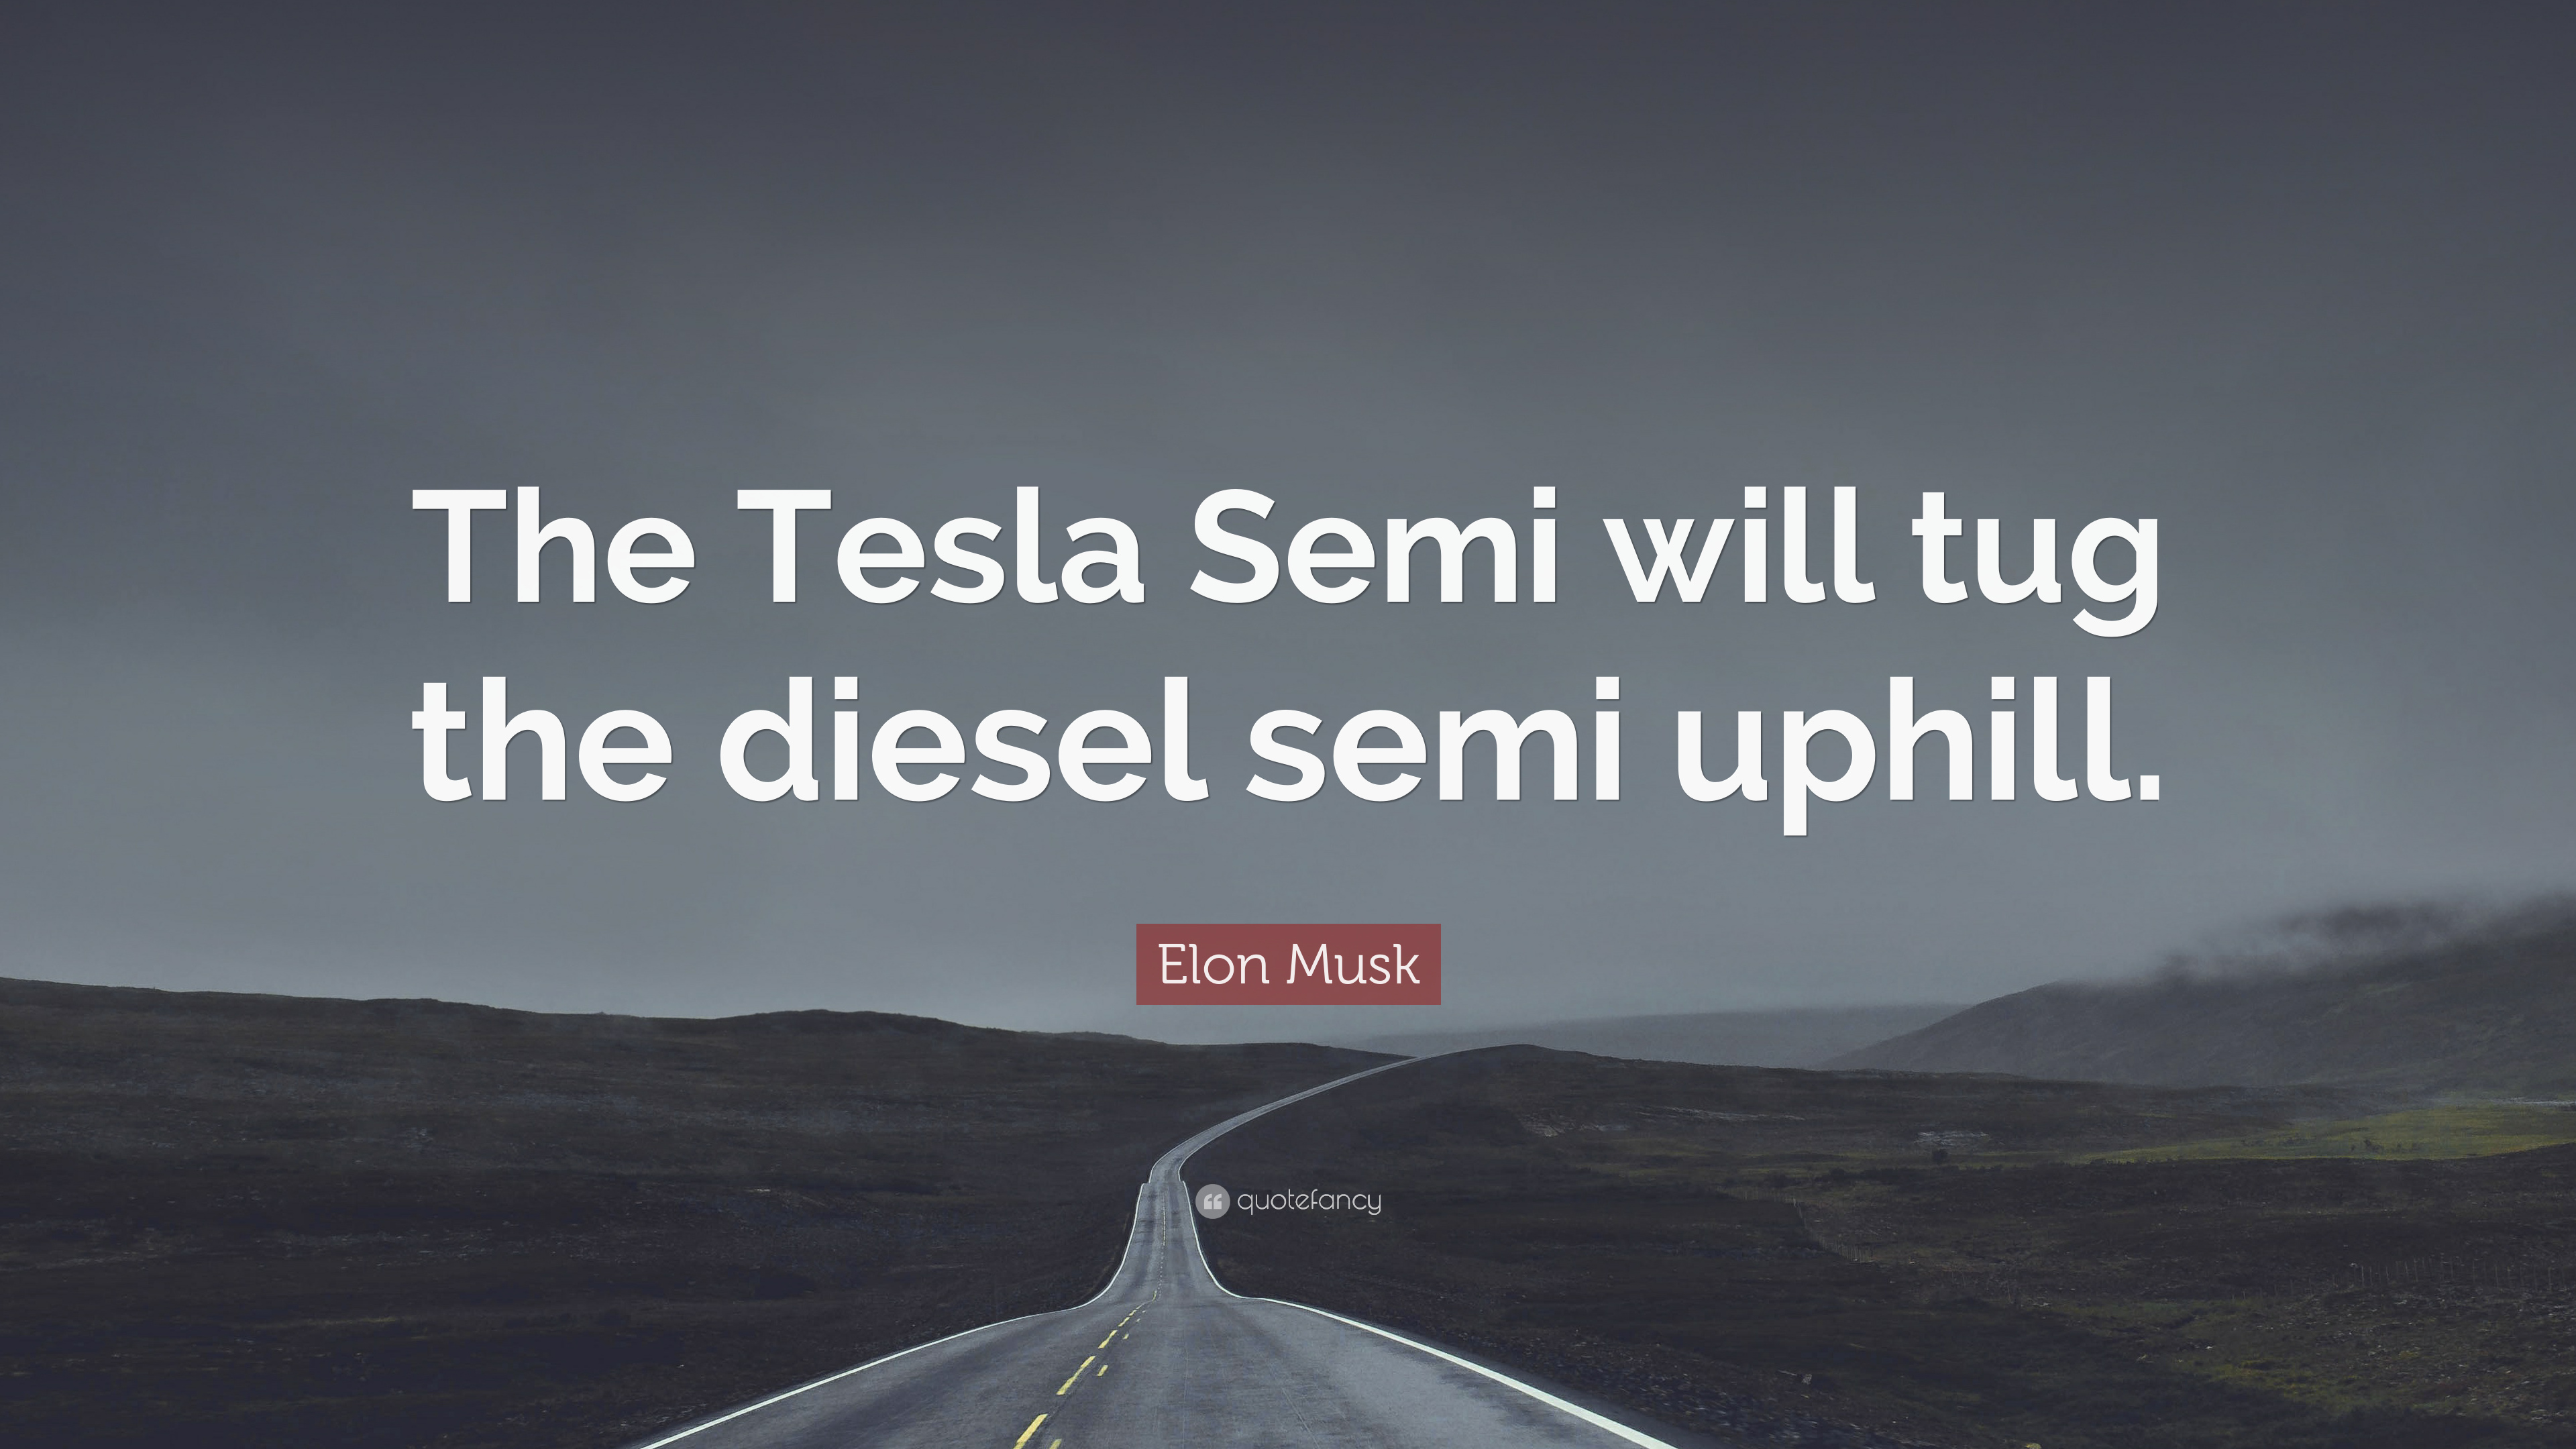 Elon Musk Quote: “The Tesla Semi will tug the diesel semi